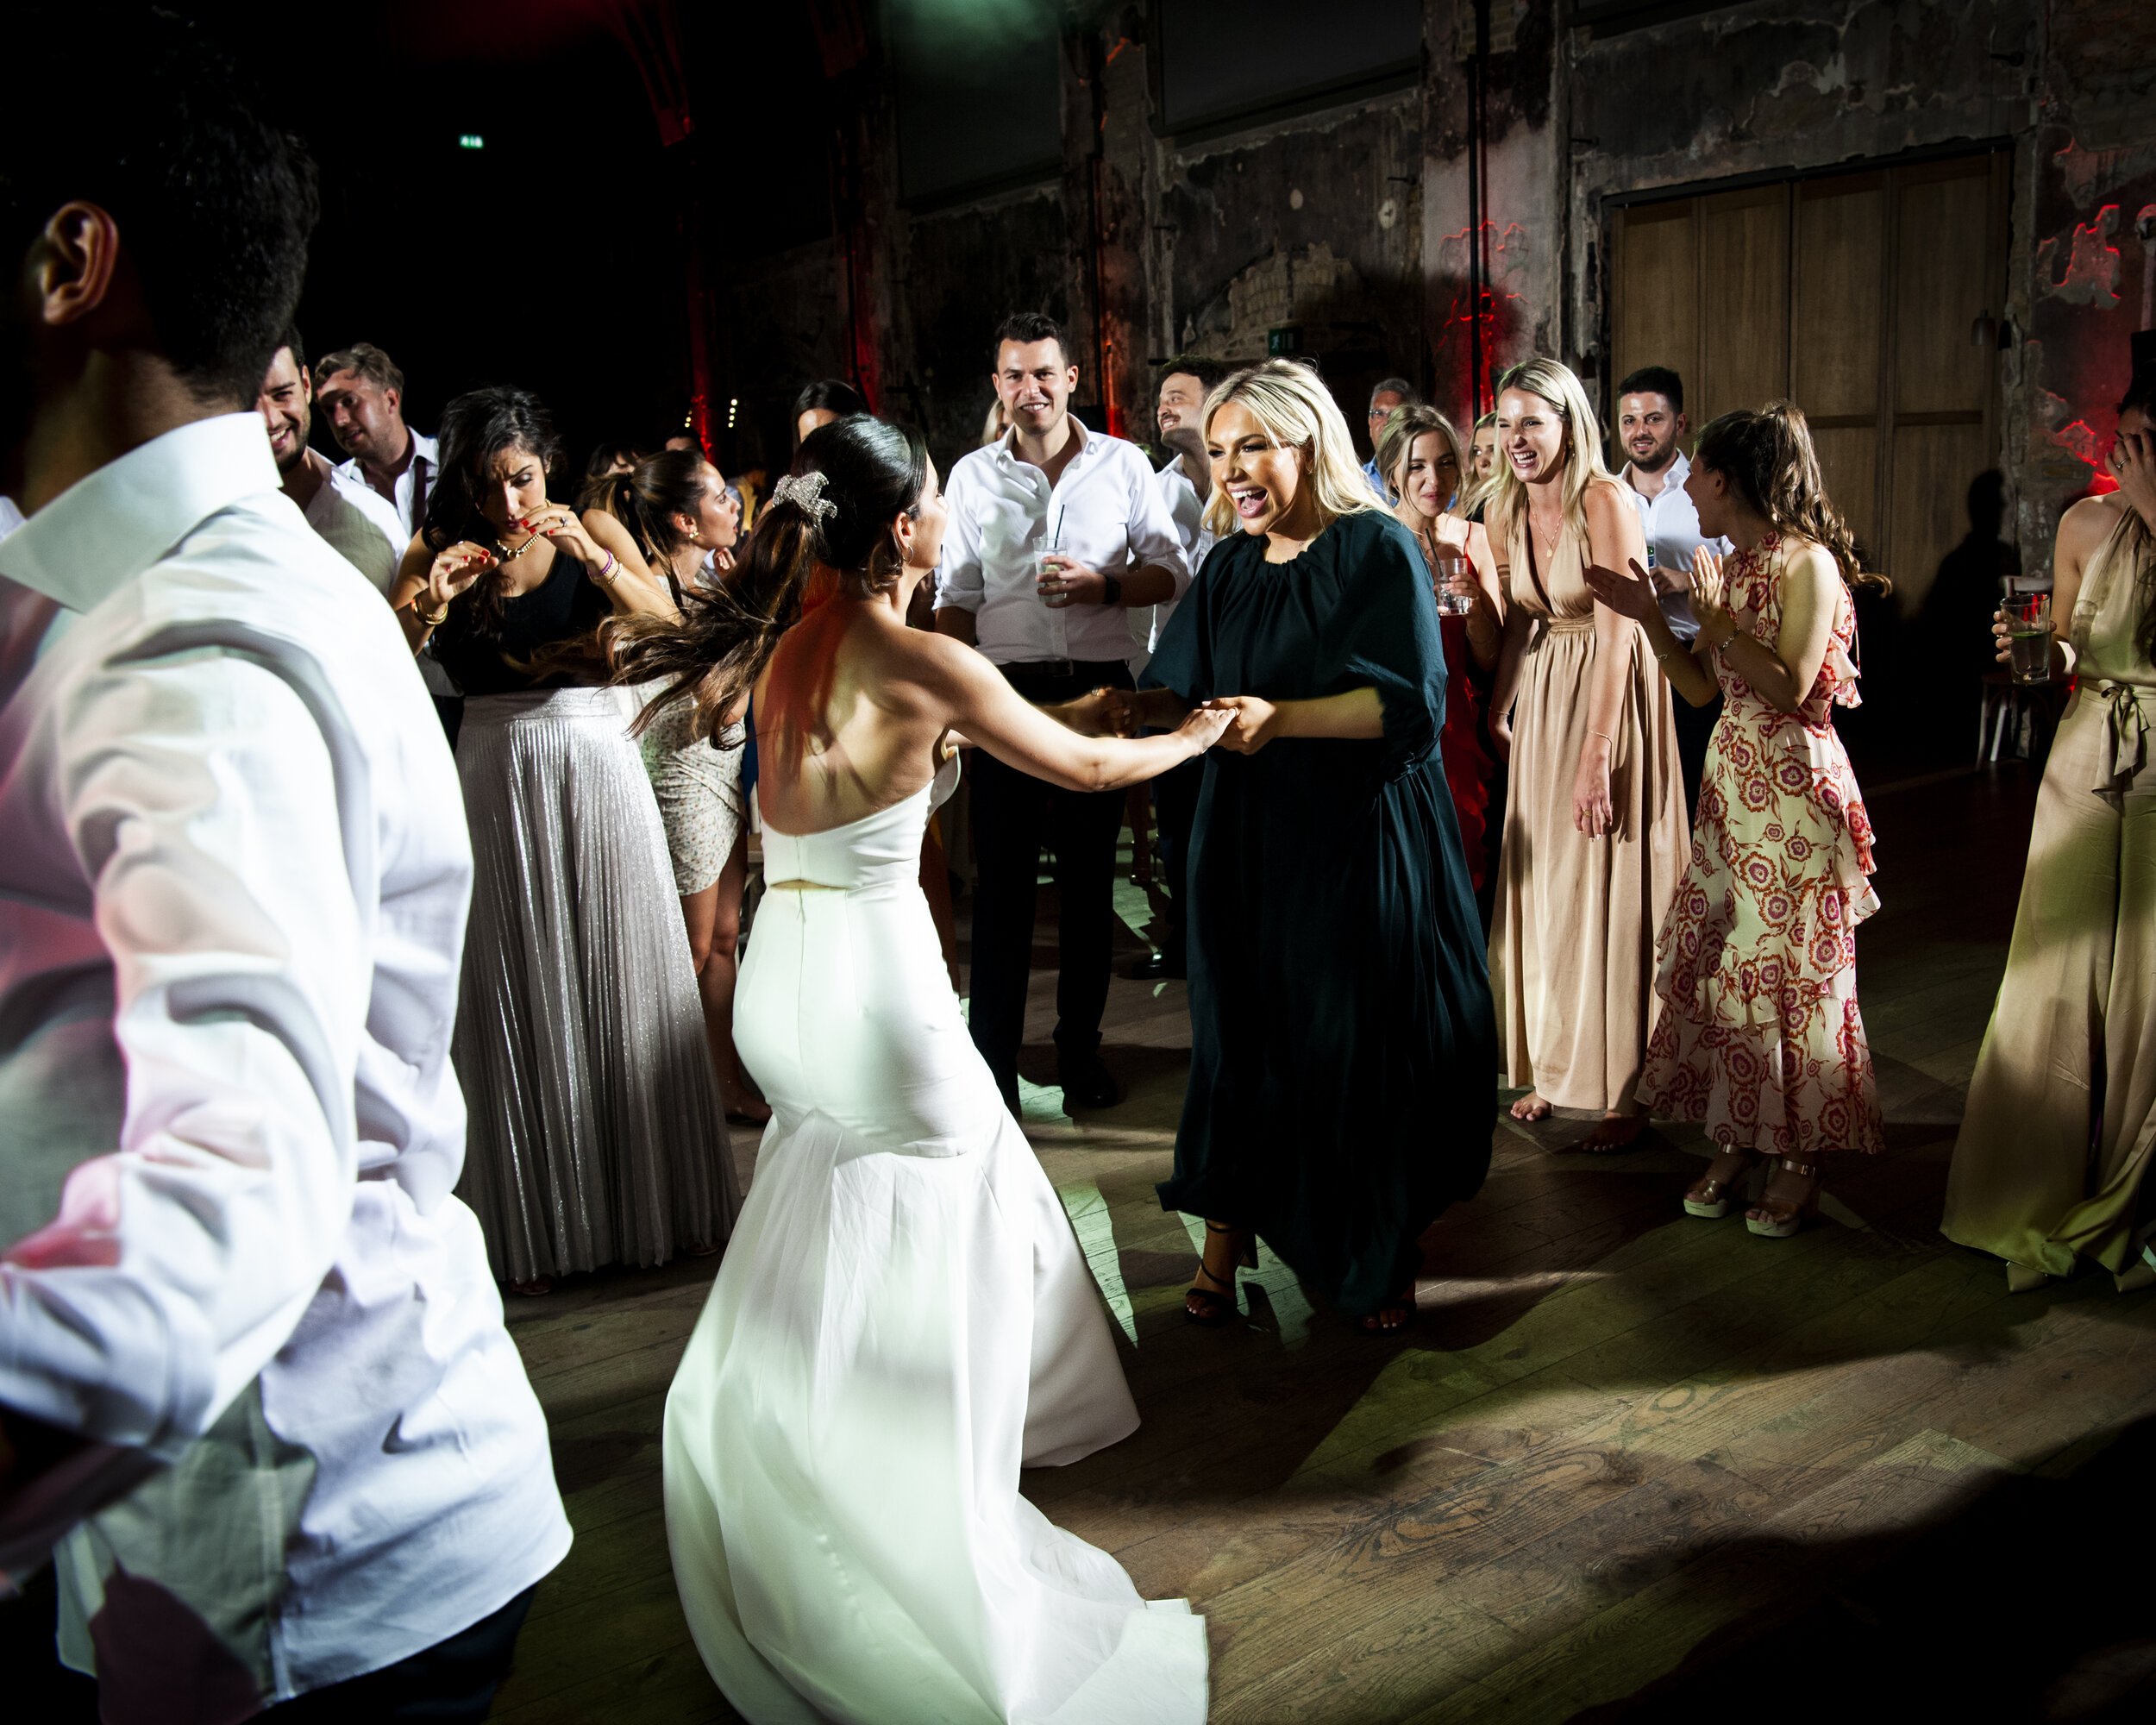 Beautiful bride Michaela wore a wedding dress by Halfpenny London